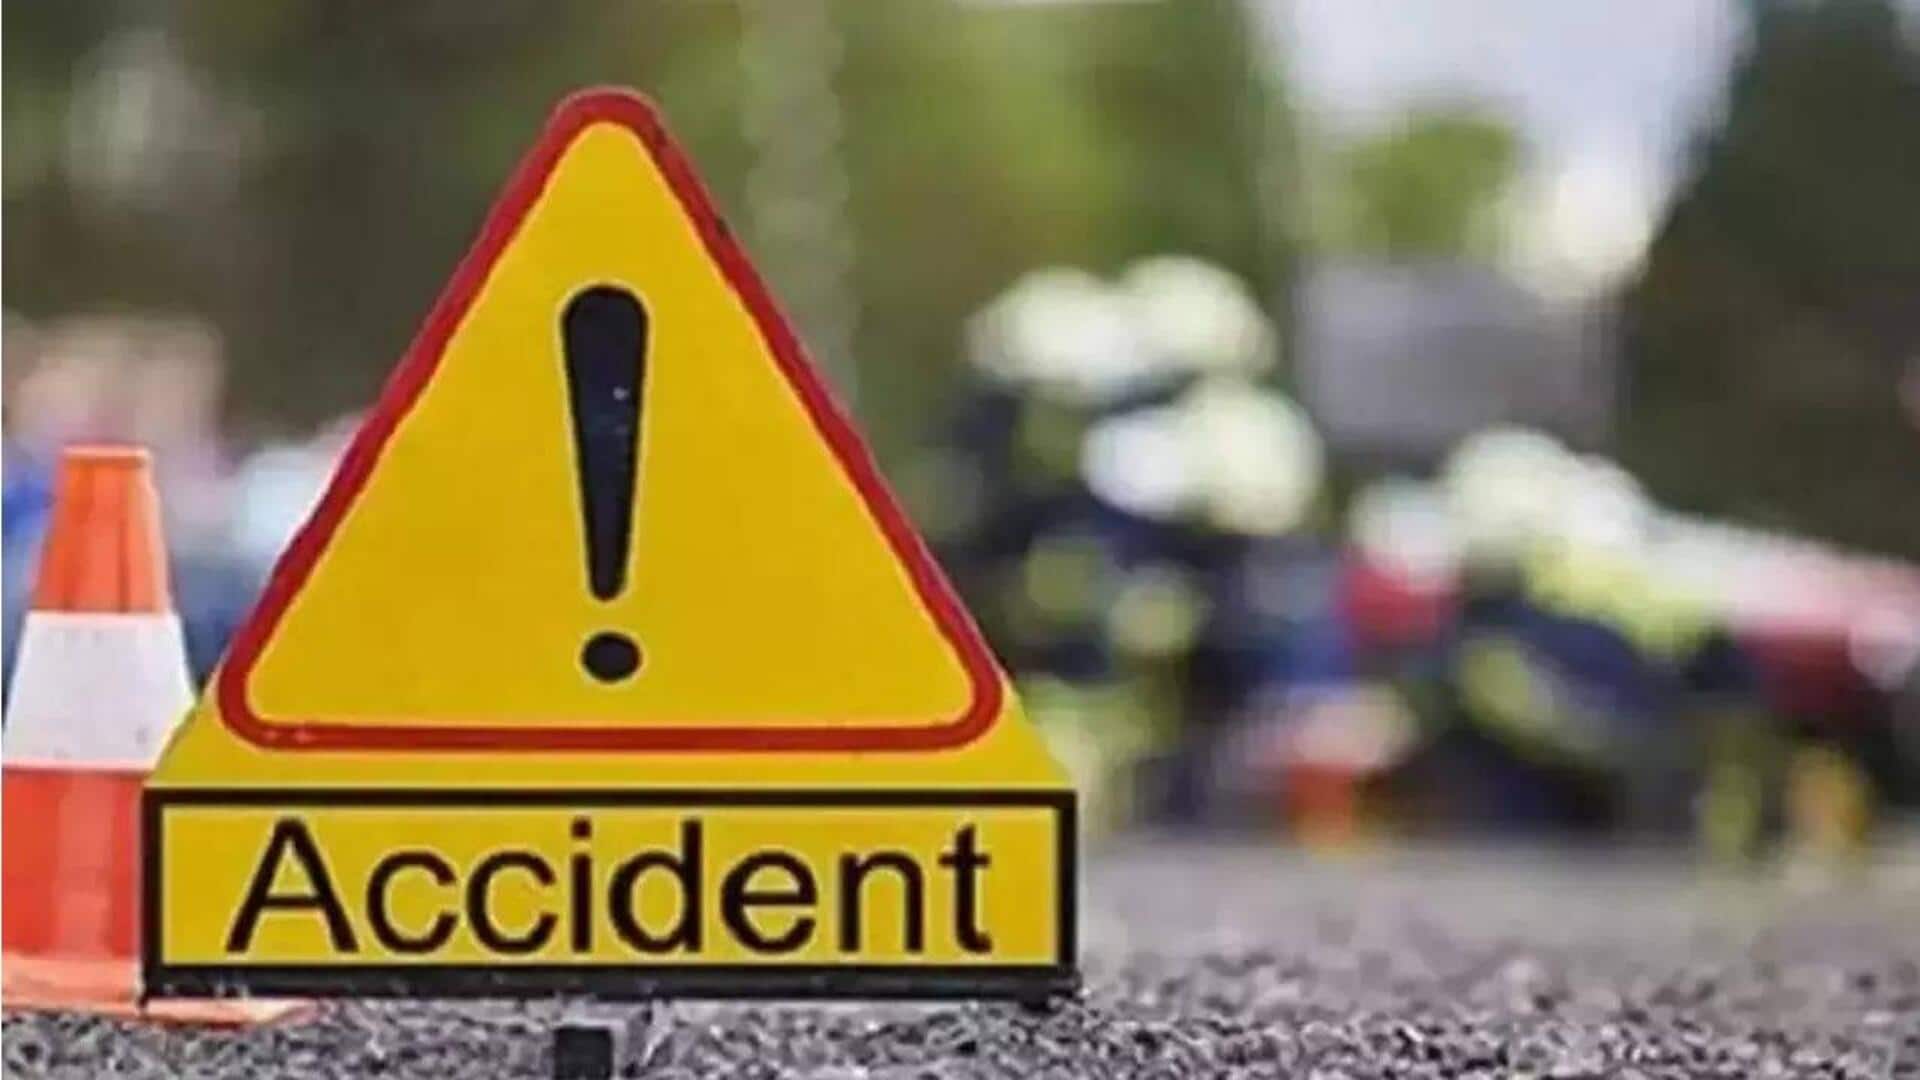 Bus Accident: కర్నూలు, నిర్మల్‌లో జరిగిన రోడ్డు ప్రమాదాల్లో ముగ్గురు మృతి, పలువురికి గాయలు 